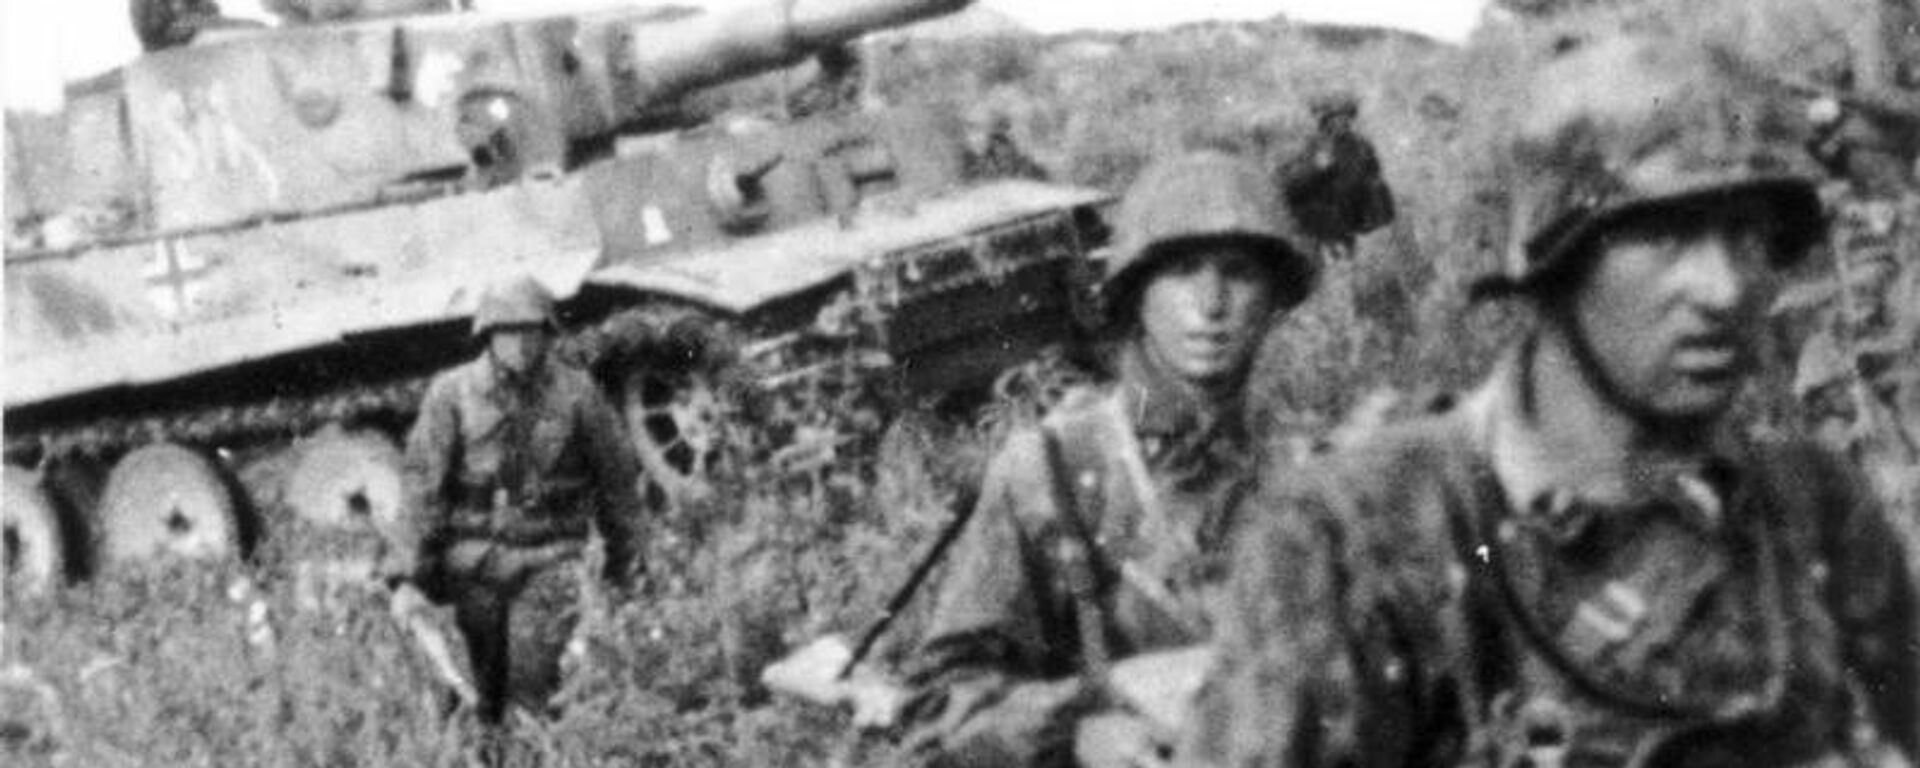 Waffen SS Division Das Reich units with a Tiger I tank. Kursk, 1943.  - Sputnik International, 1920, 23.09.2021